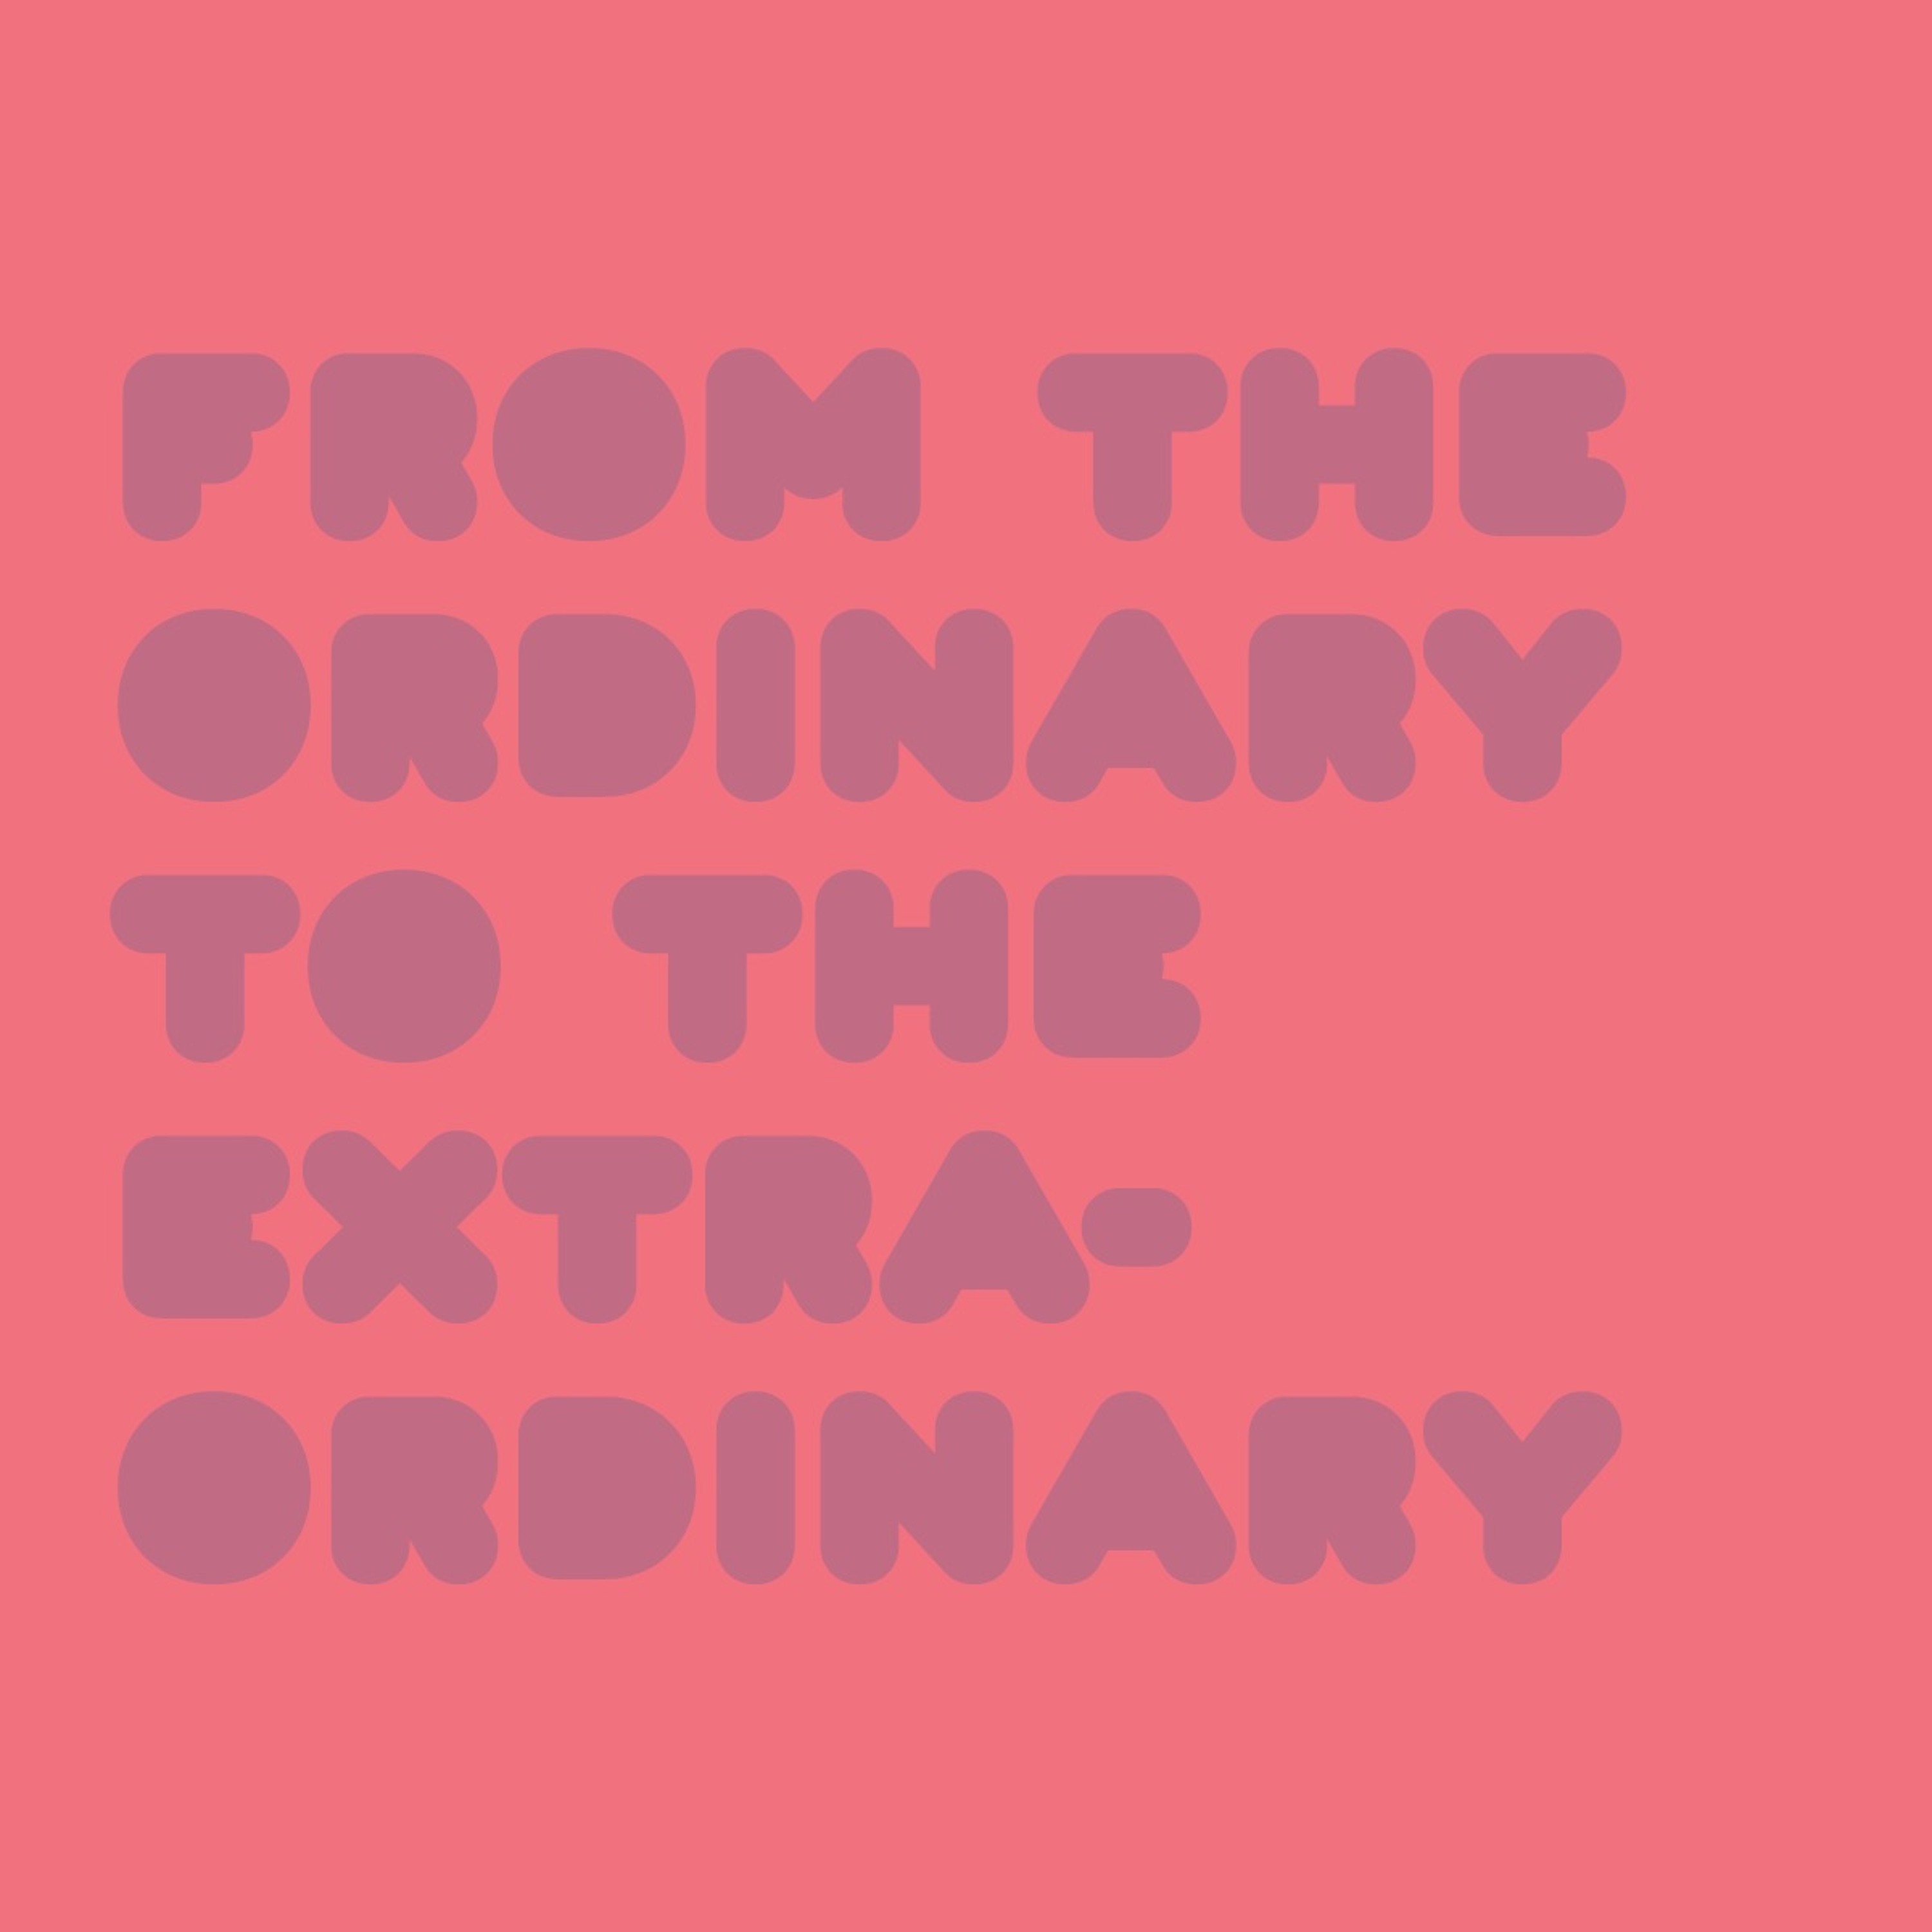 ‘From the Ordinary to the Extraordinary’ / David McBride